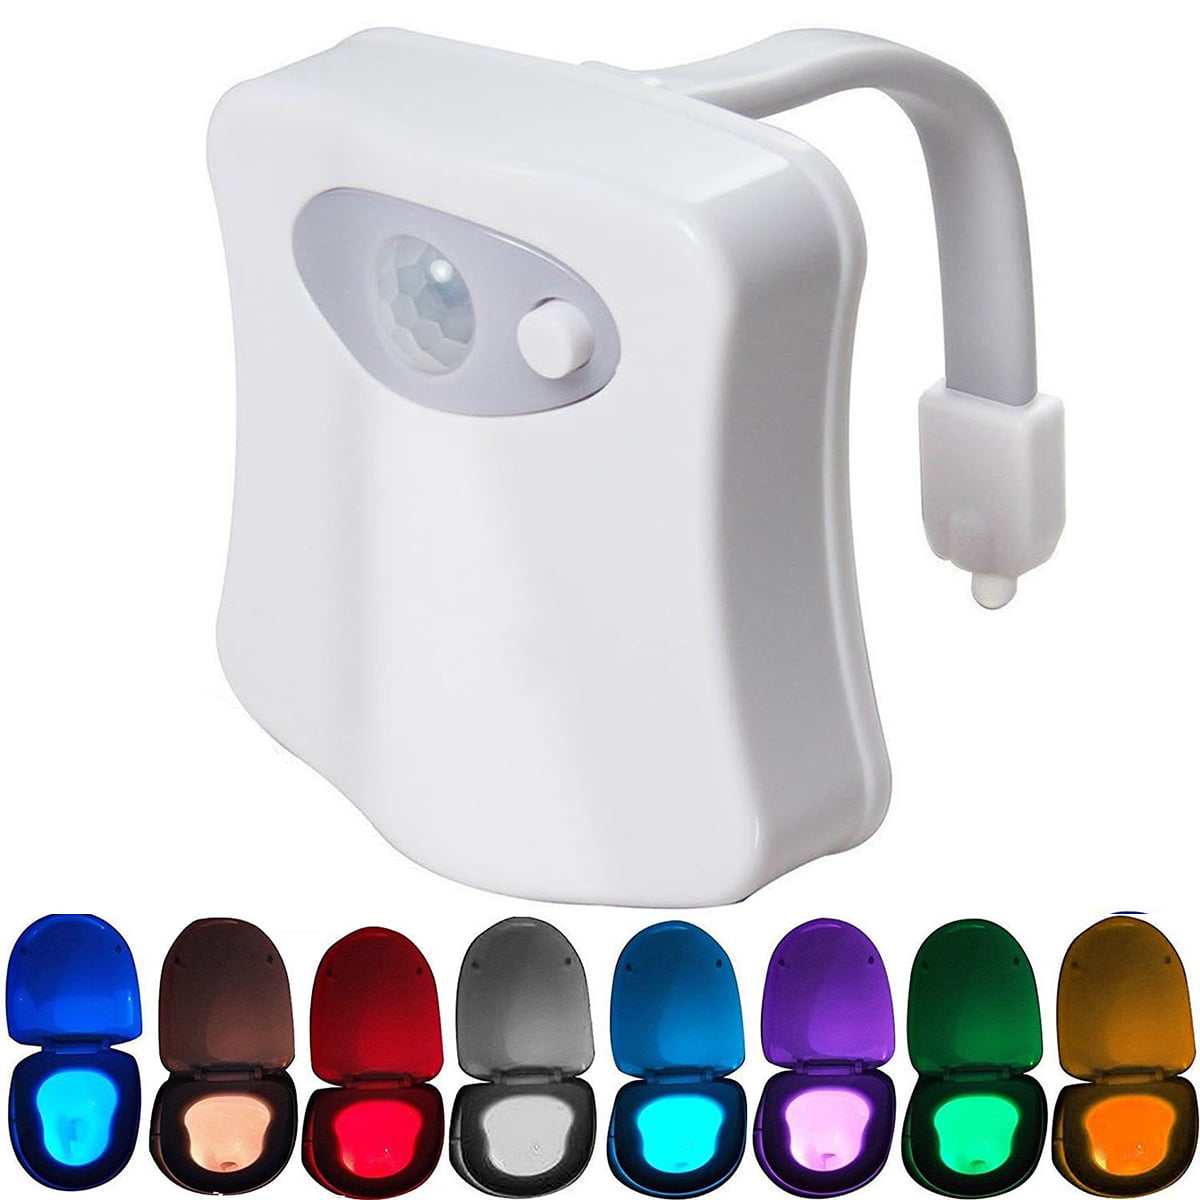 1pc Toilet Motion Sensor Night Light, 16 Color Bathroom Sensing1ight  Intelligent Sensing Bathroom LED Light Body Movement ActivatedSeat Up/down  Sensing Night Light Lighting